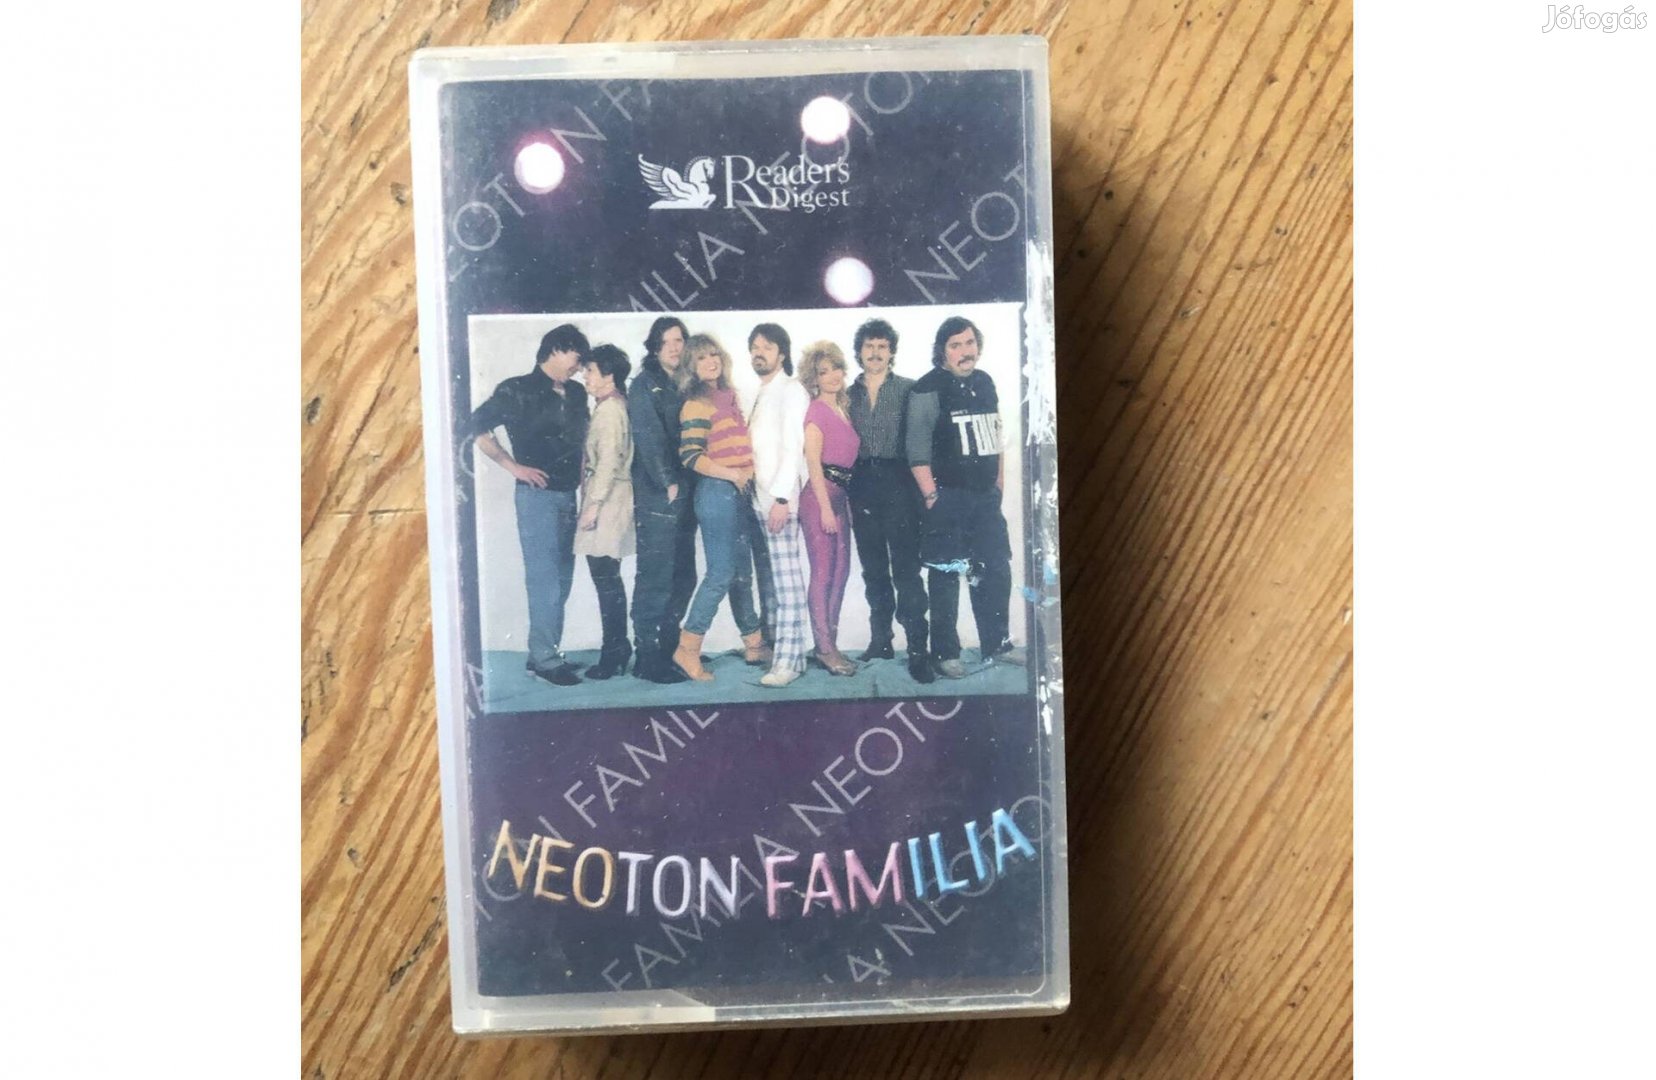 Neoton Família (Readersdigest) kazetta 2000 Ft :Lenti